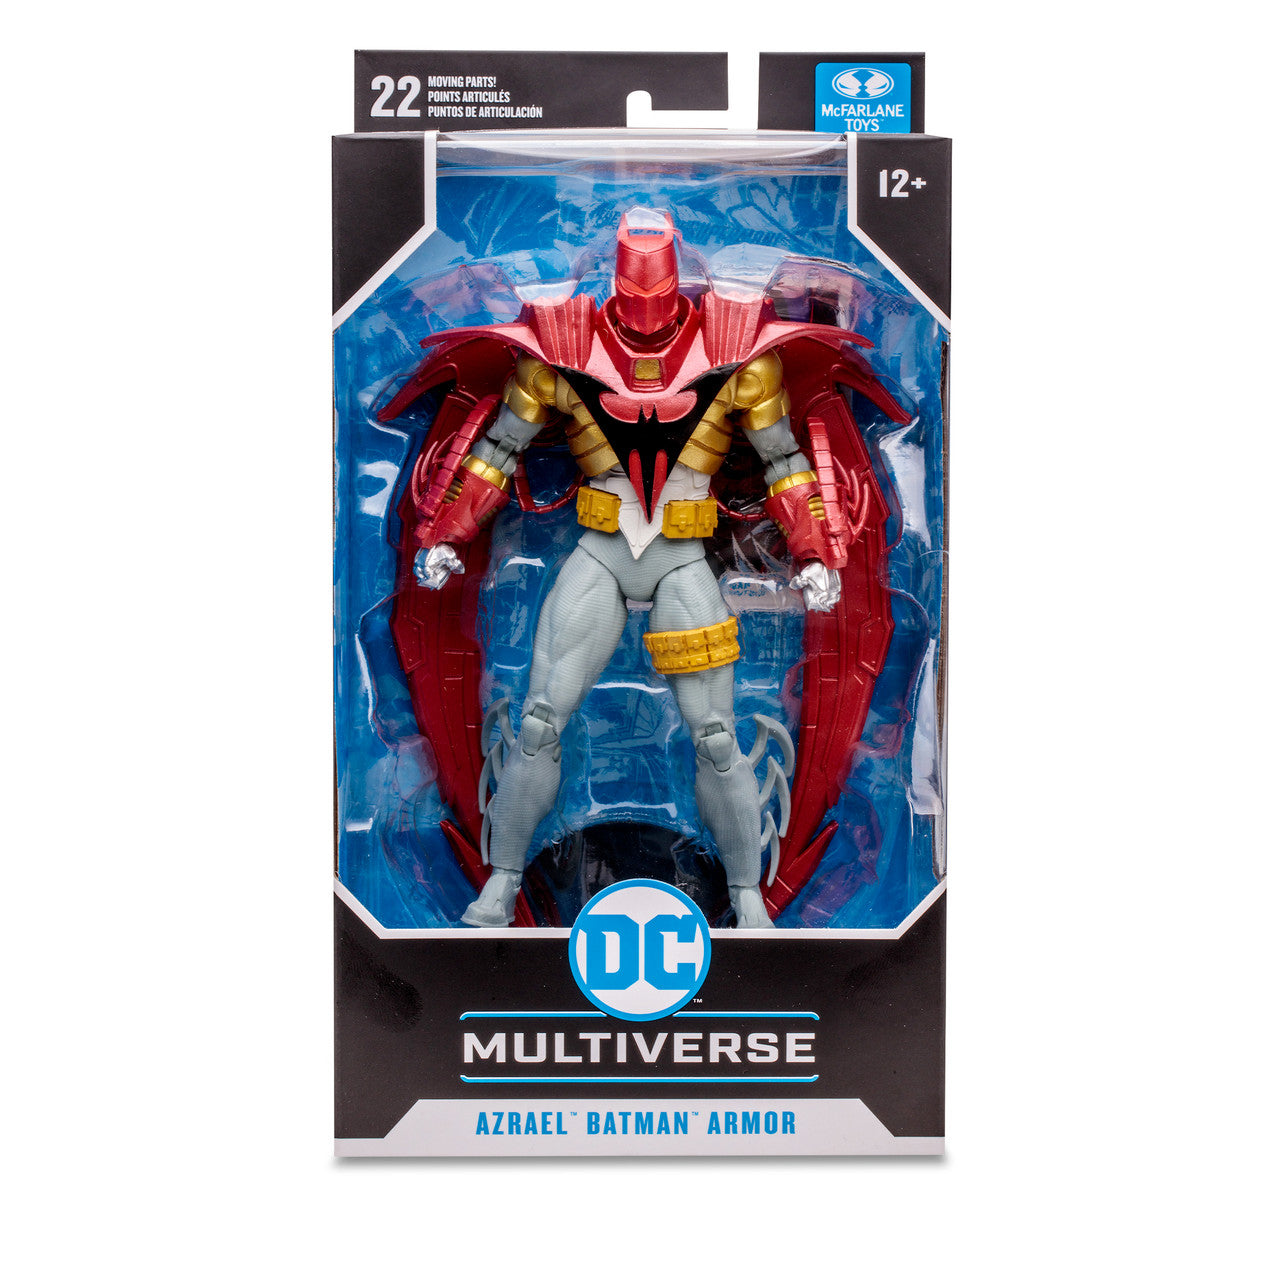 McFarlane DC Heroes Multiverse Wave 16 Azrael Batman Armor Knightsend 7-Inch Scale Action Figure